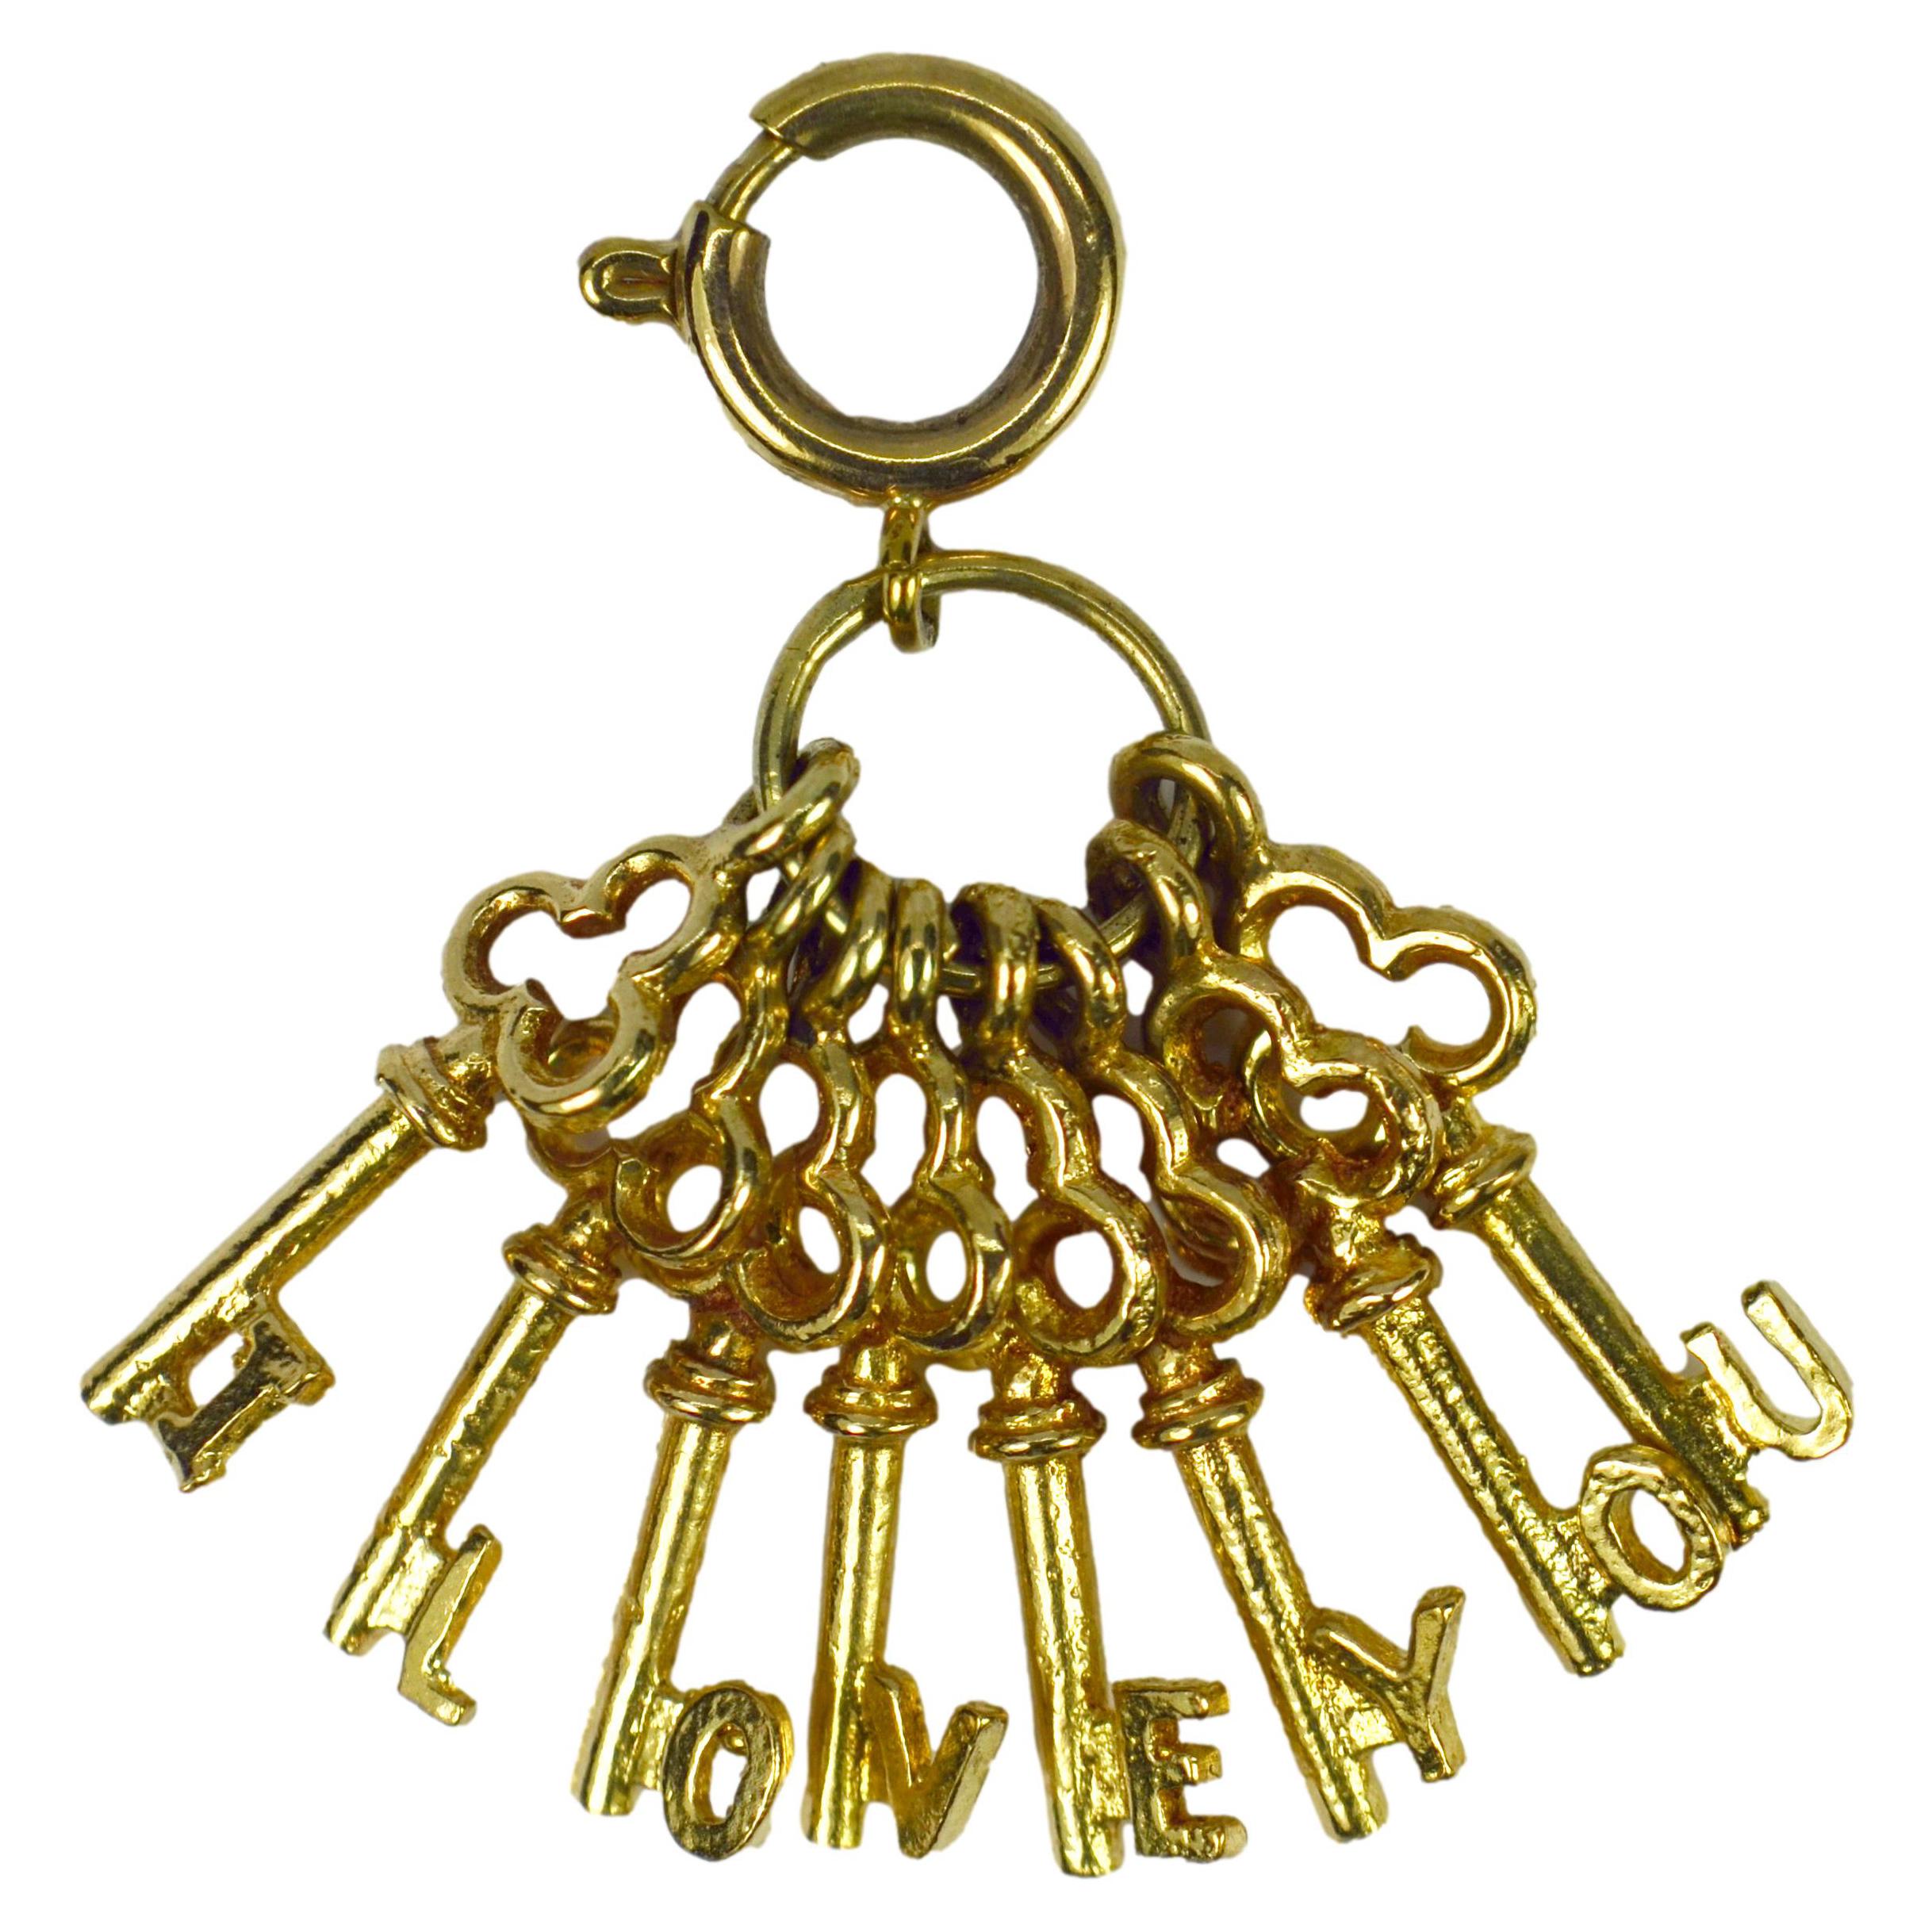 I Love You Keys 9K Yellow Gold Charm Pendant